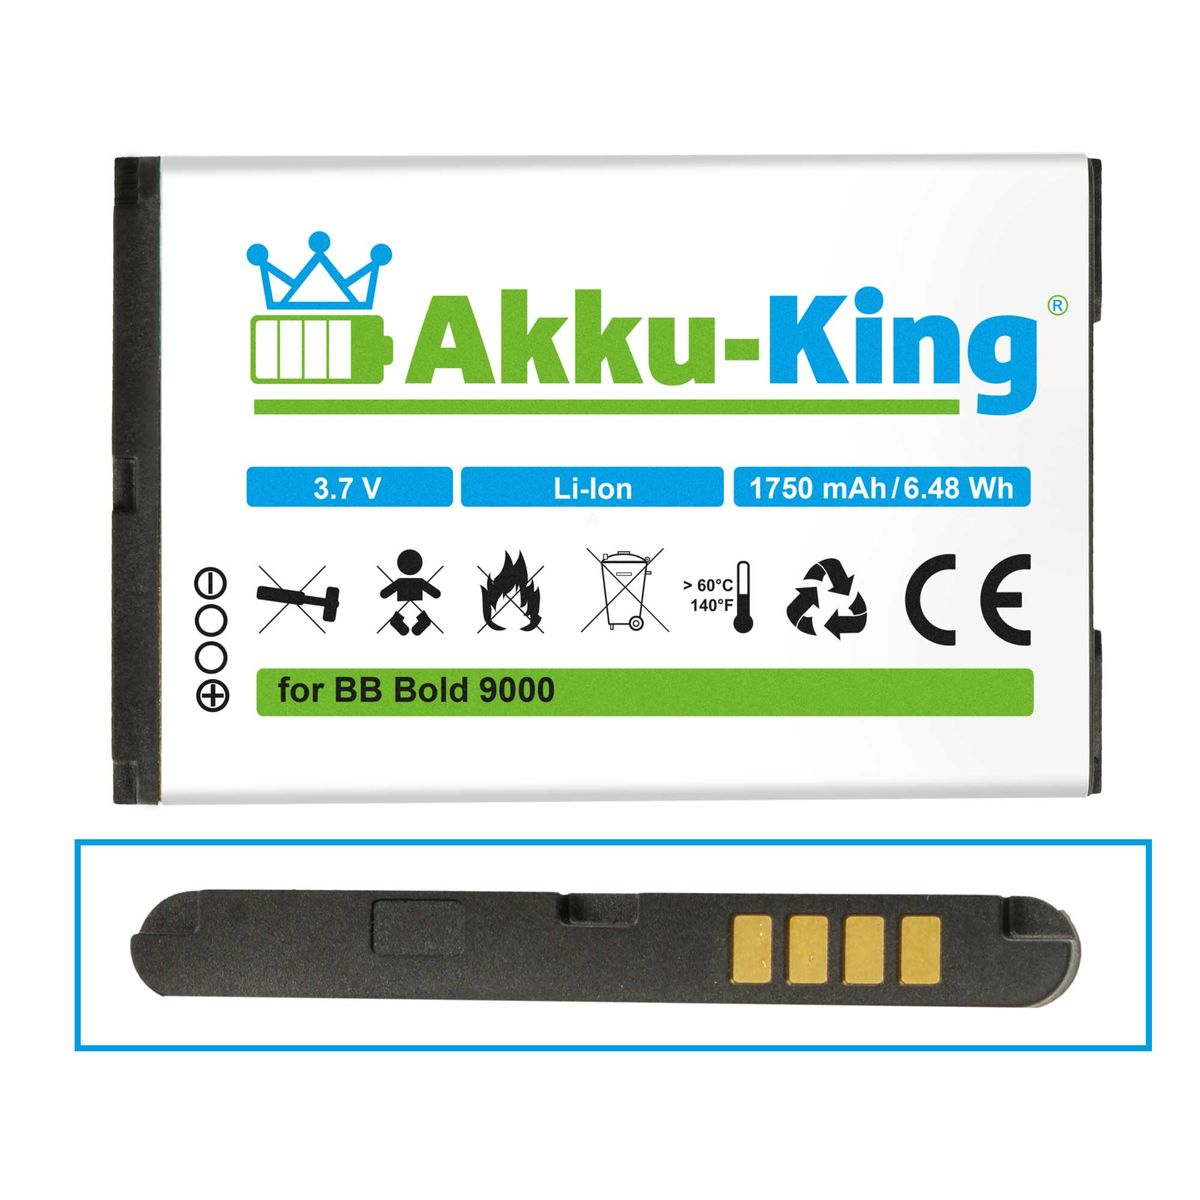 AKKU-KING Akku für Blackberry M-S1 Li-Ion Handy-Akku, Volt, 1700mAh 3.7